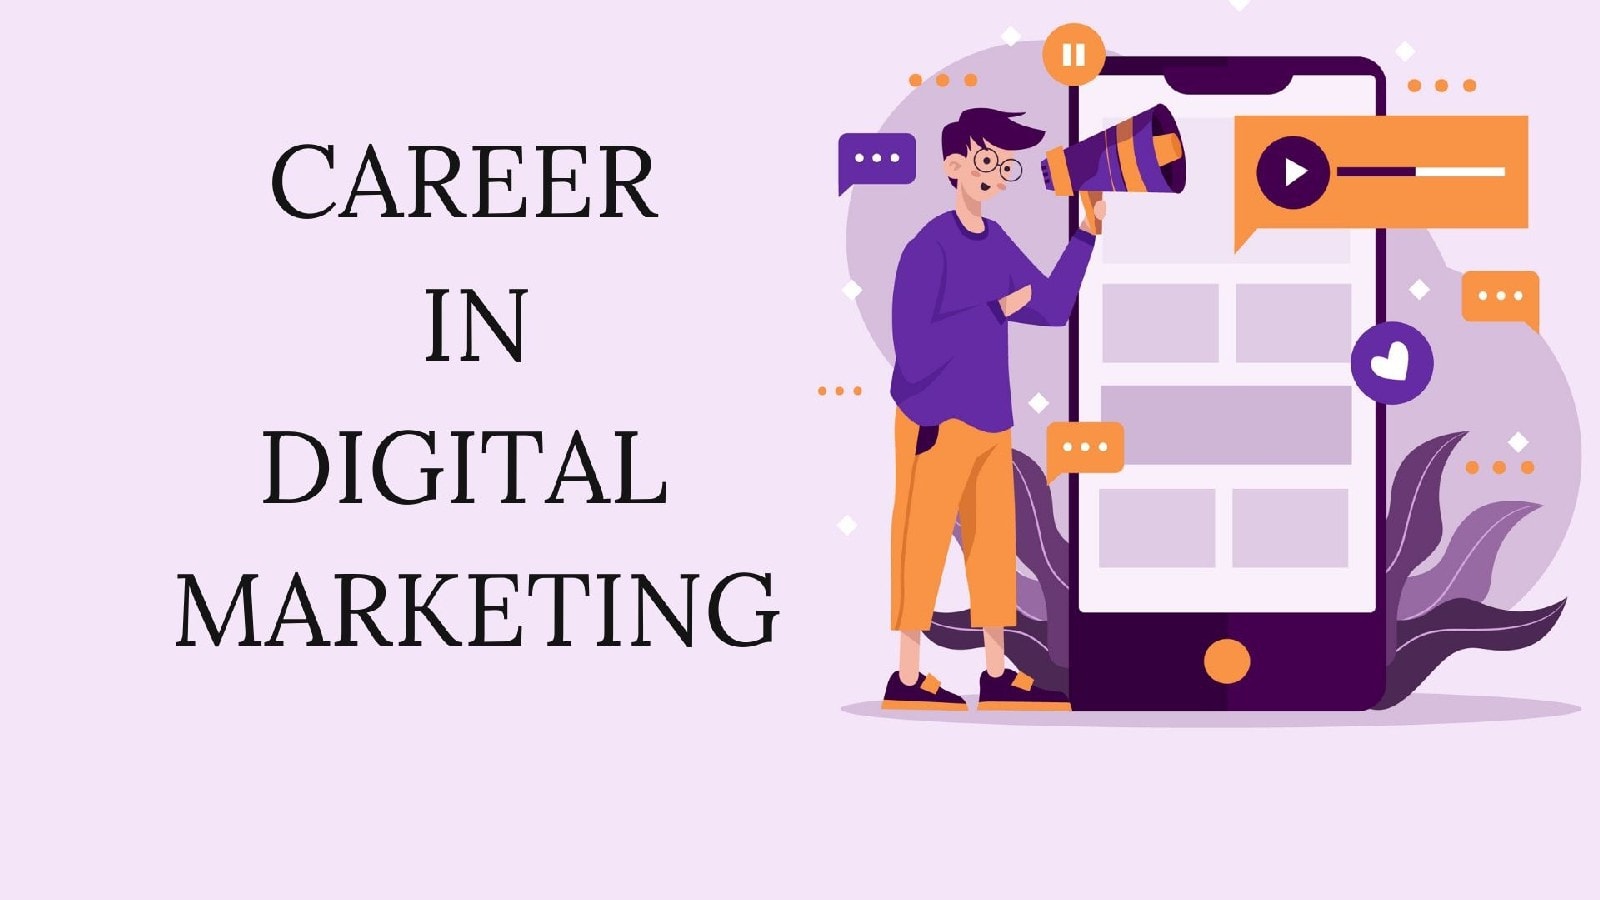 Careers In Digital Marketing - Career Options, Skills, Benefits